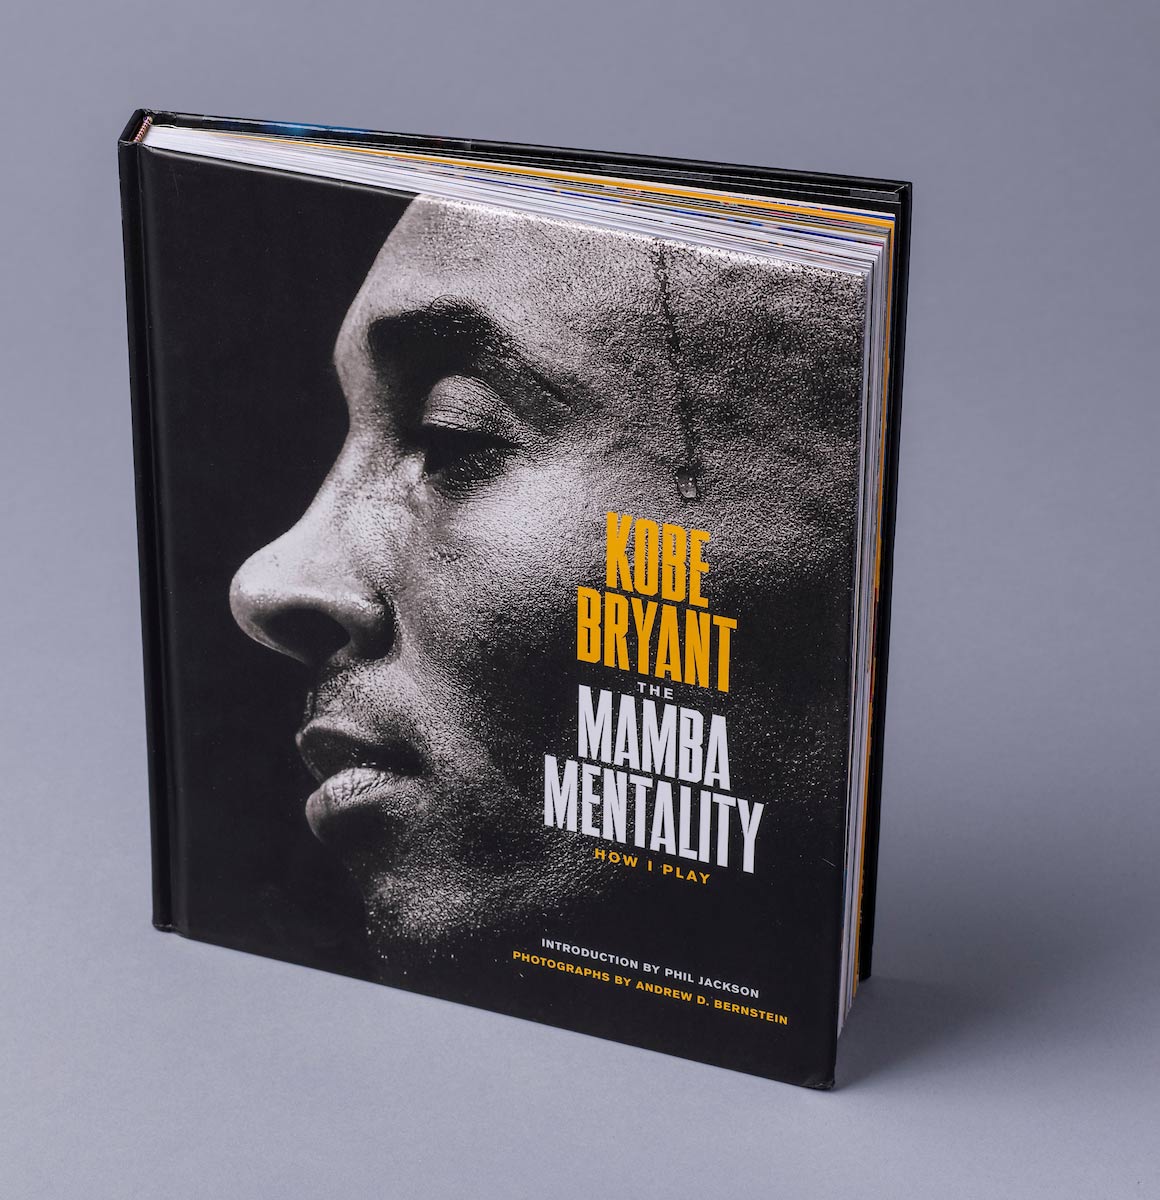 The Mamba Mentality - Kobe Bryant (Signed Book)